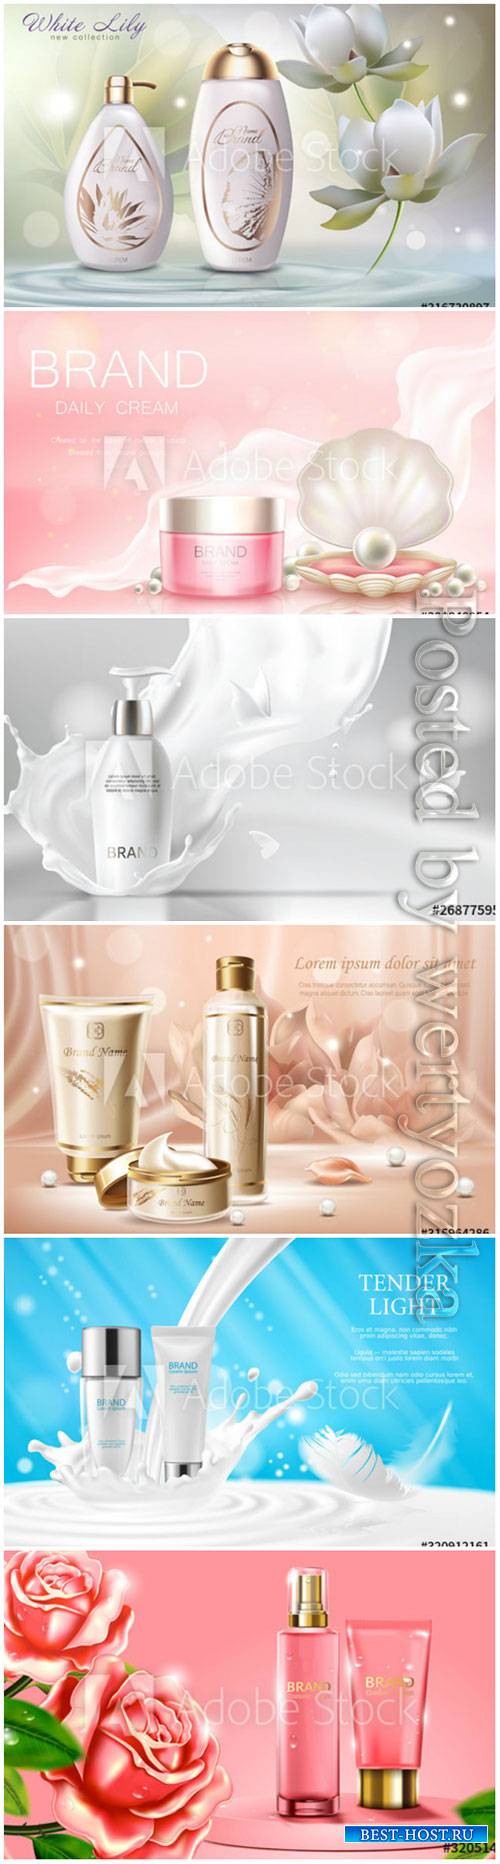 Cosmetics advertising banner vector template